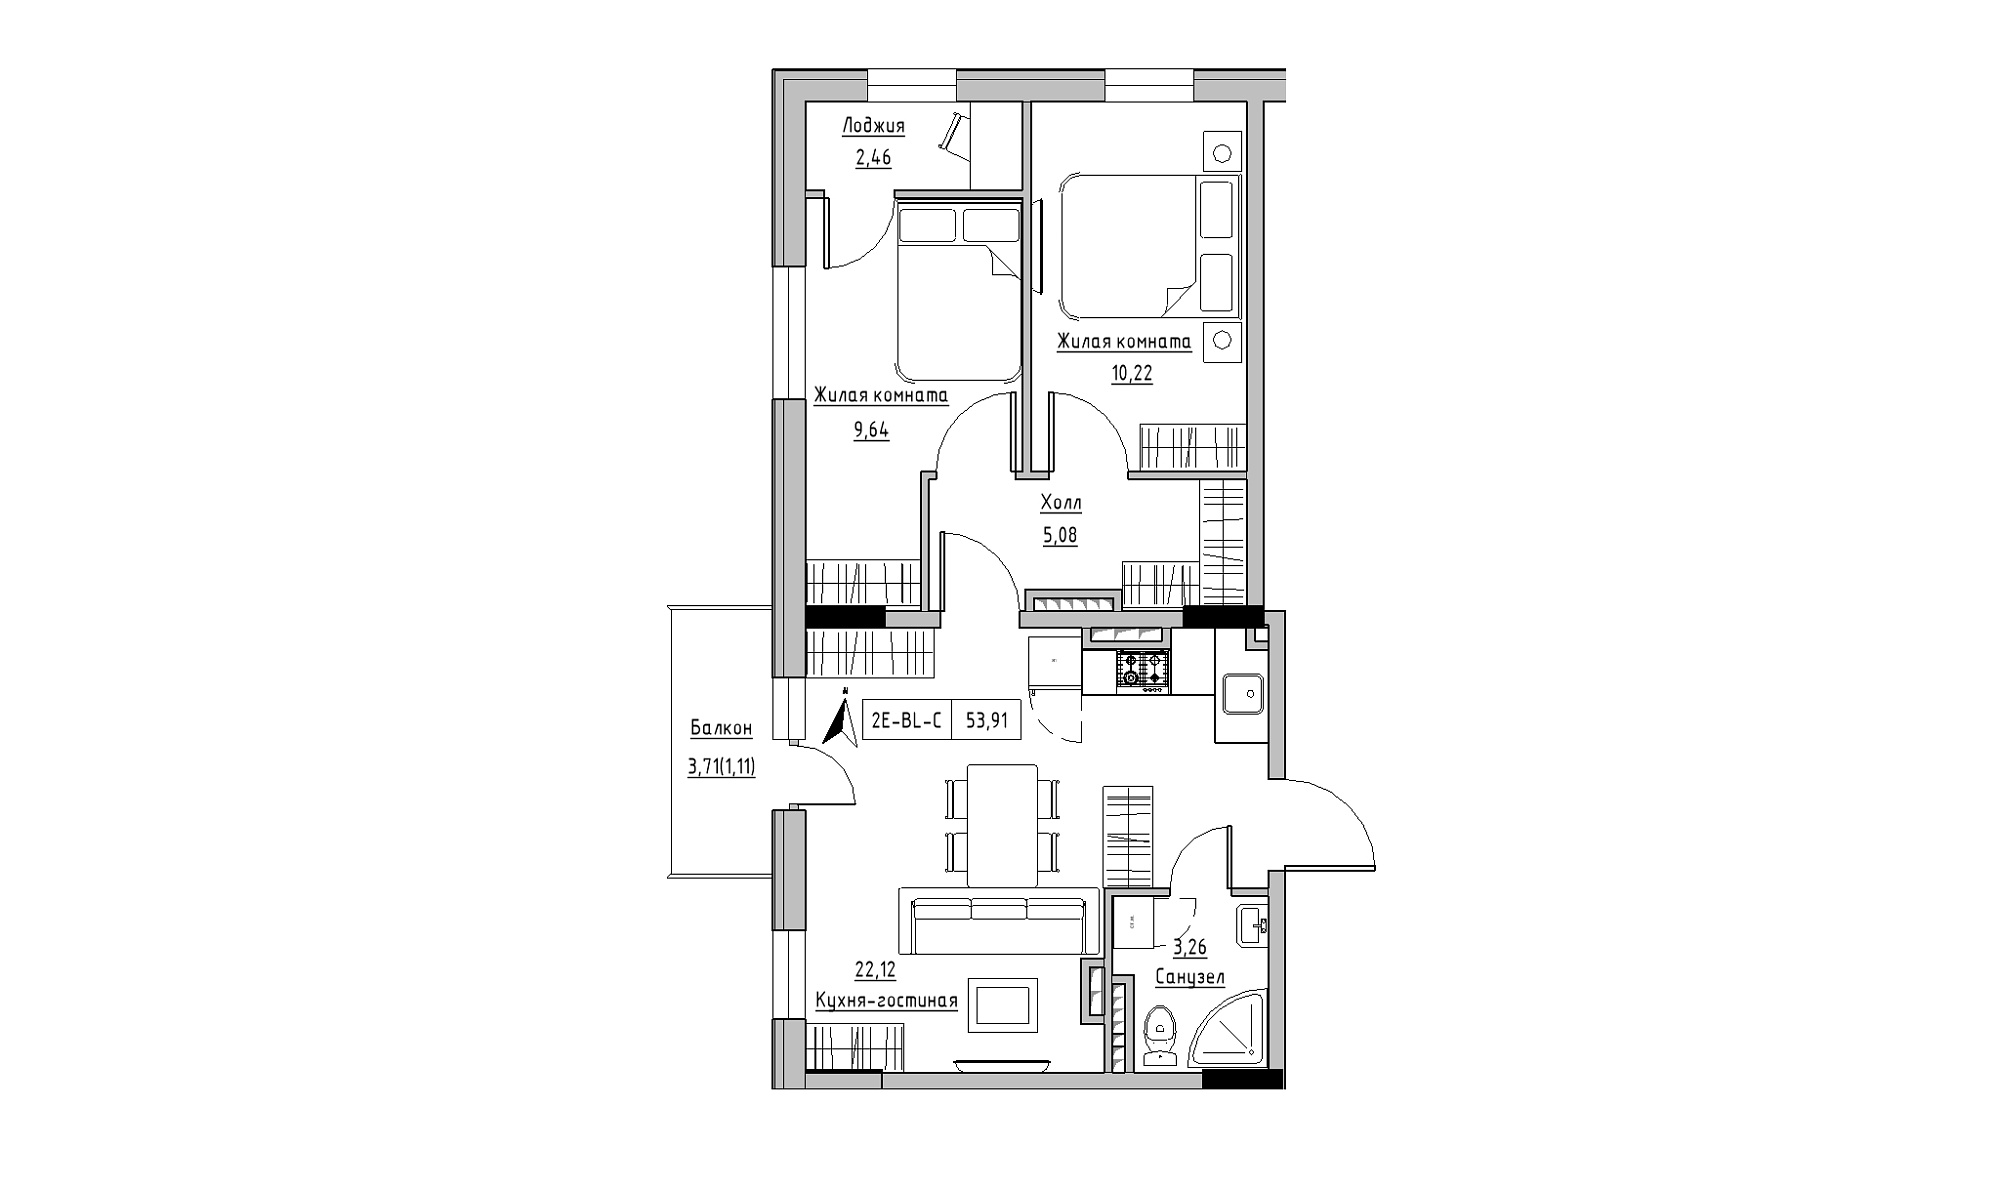 Planning 2-rm flats area 53.91m2, KS-025-05/0005.